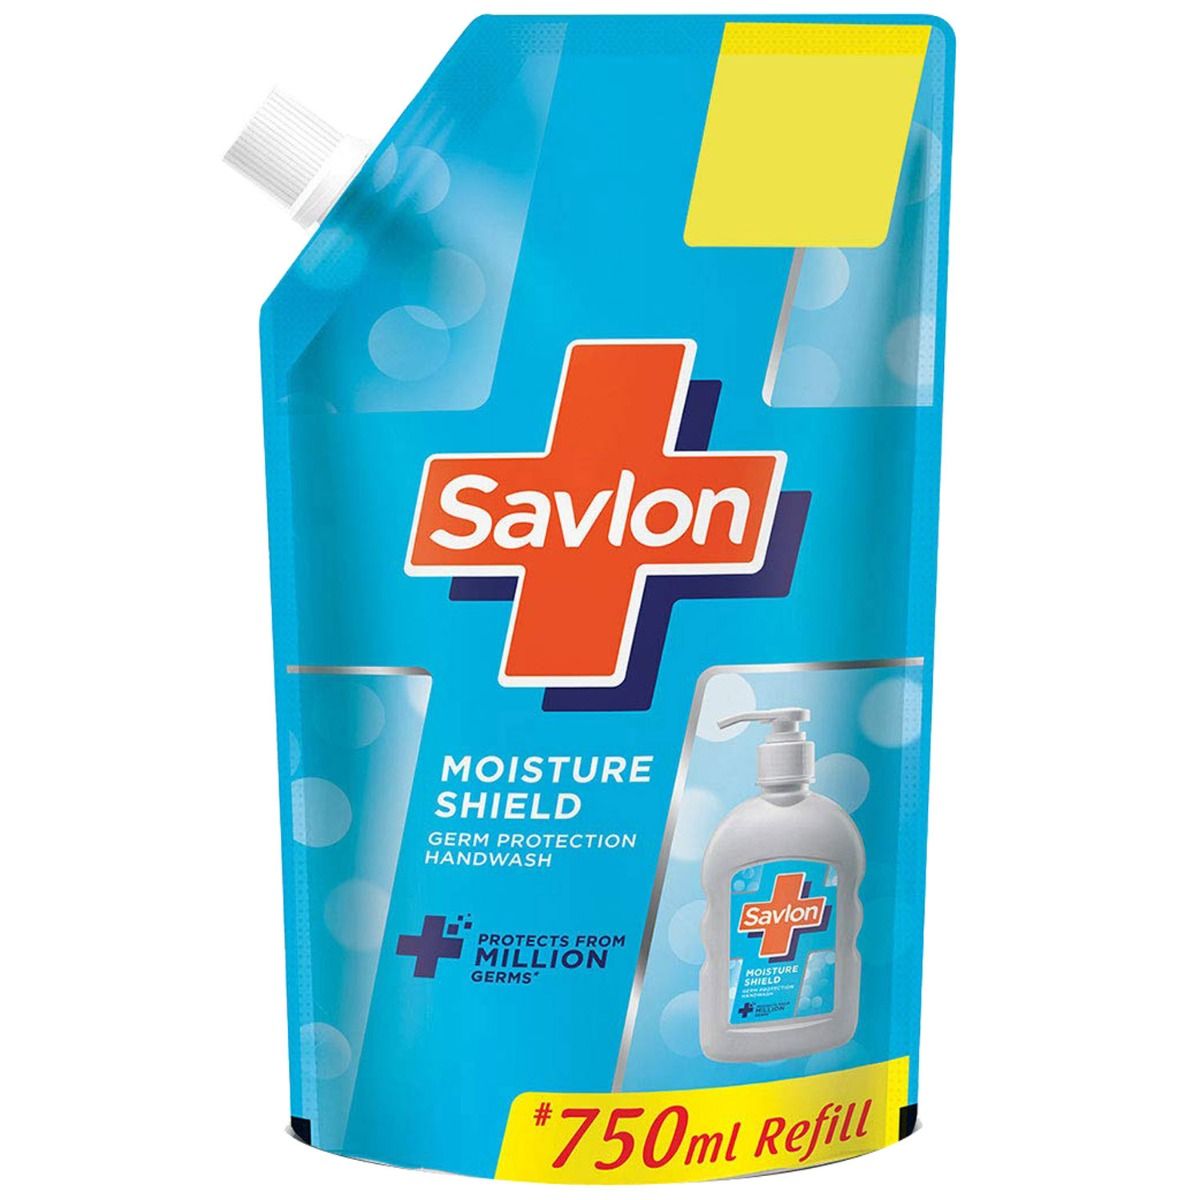 Buy Savlon Moisture Shield Germ Protection Handwash, 750 ml Refill Pack Online